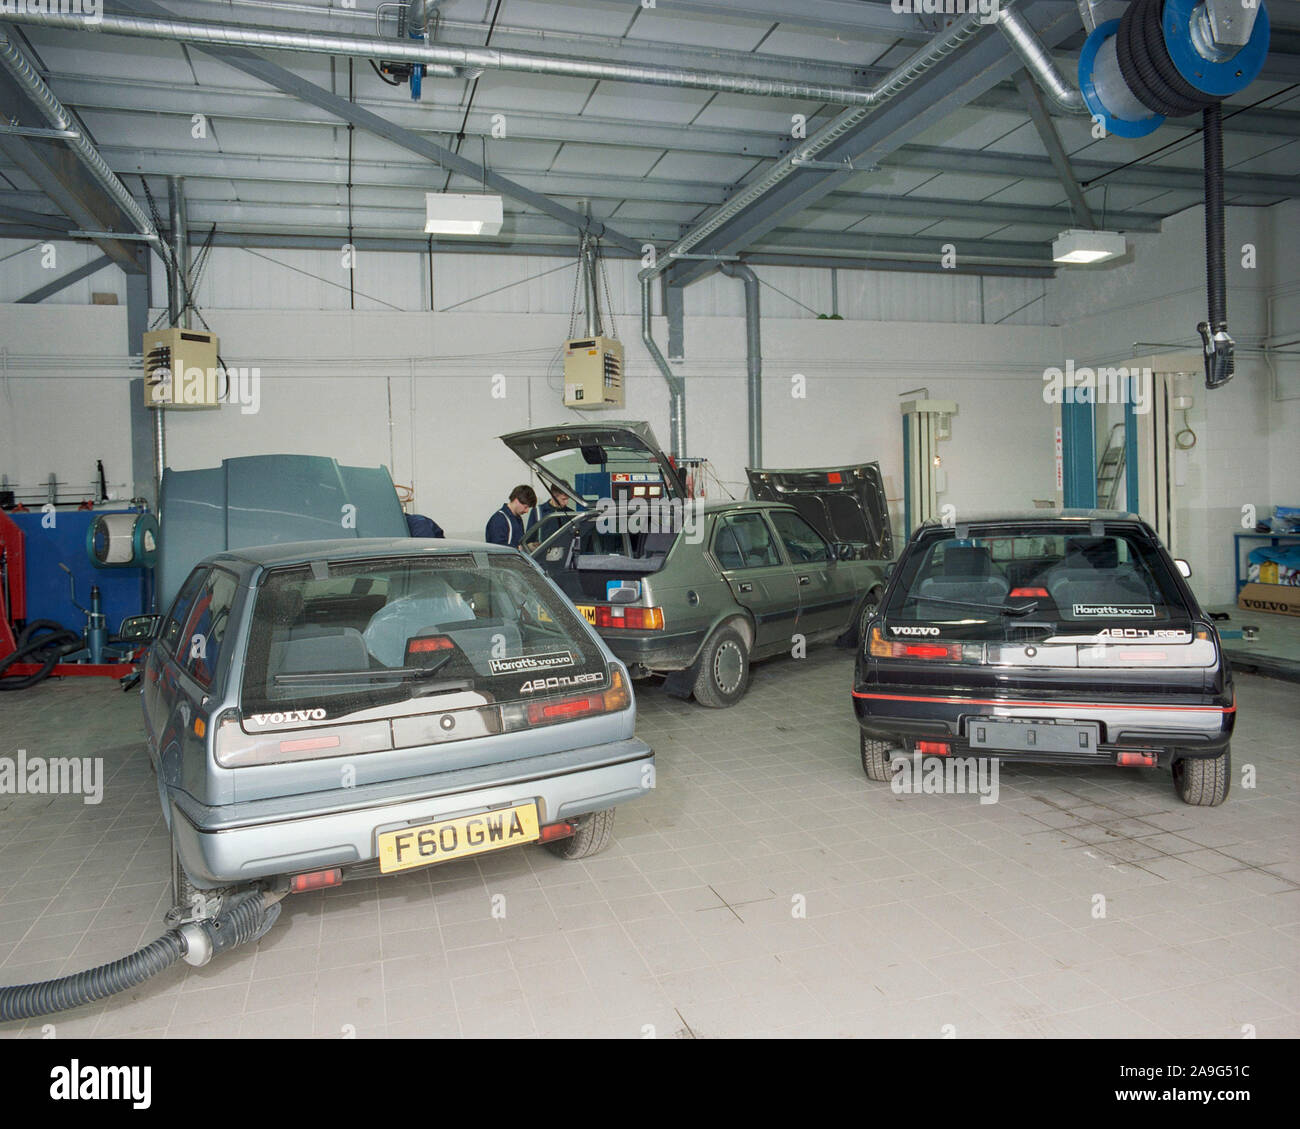 1989 Volvo car dealership, Rotherham, South Yorkshire, Northern England, UK Stock Photo